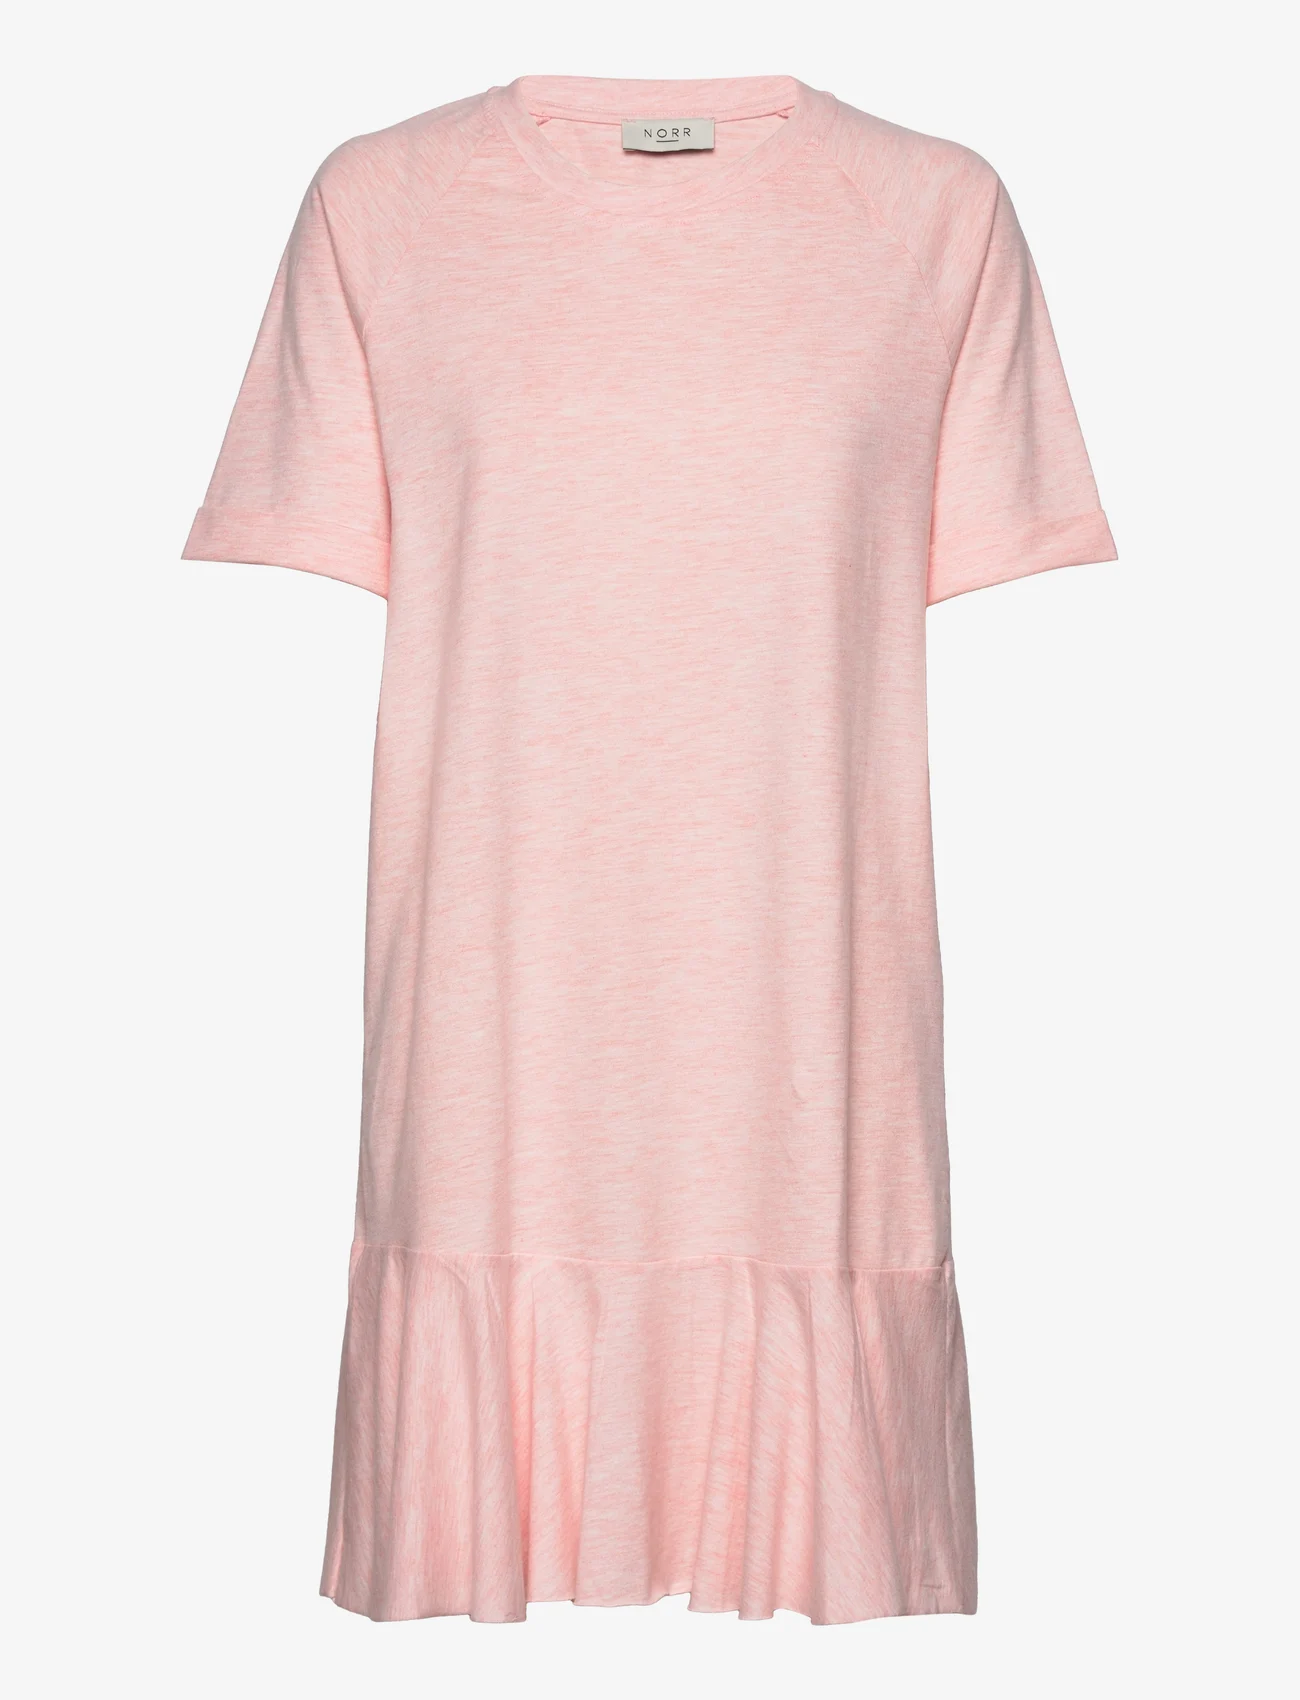 NORR - Payton dress - t-shirt dresses - light pink mélange - 0